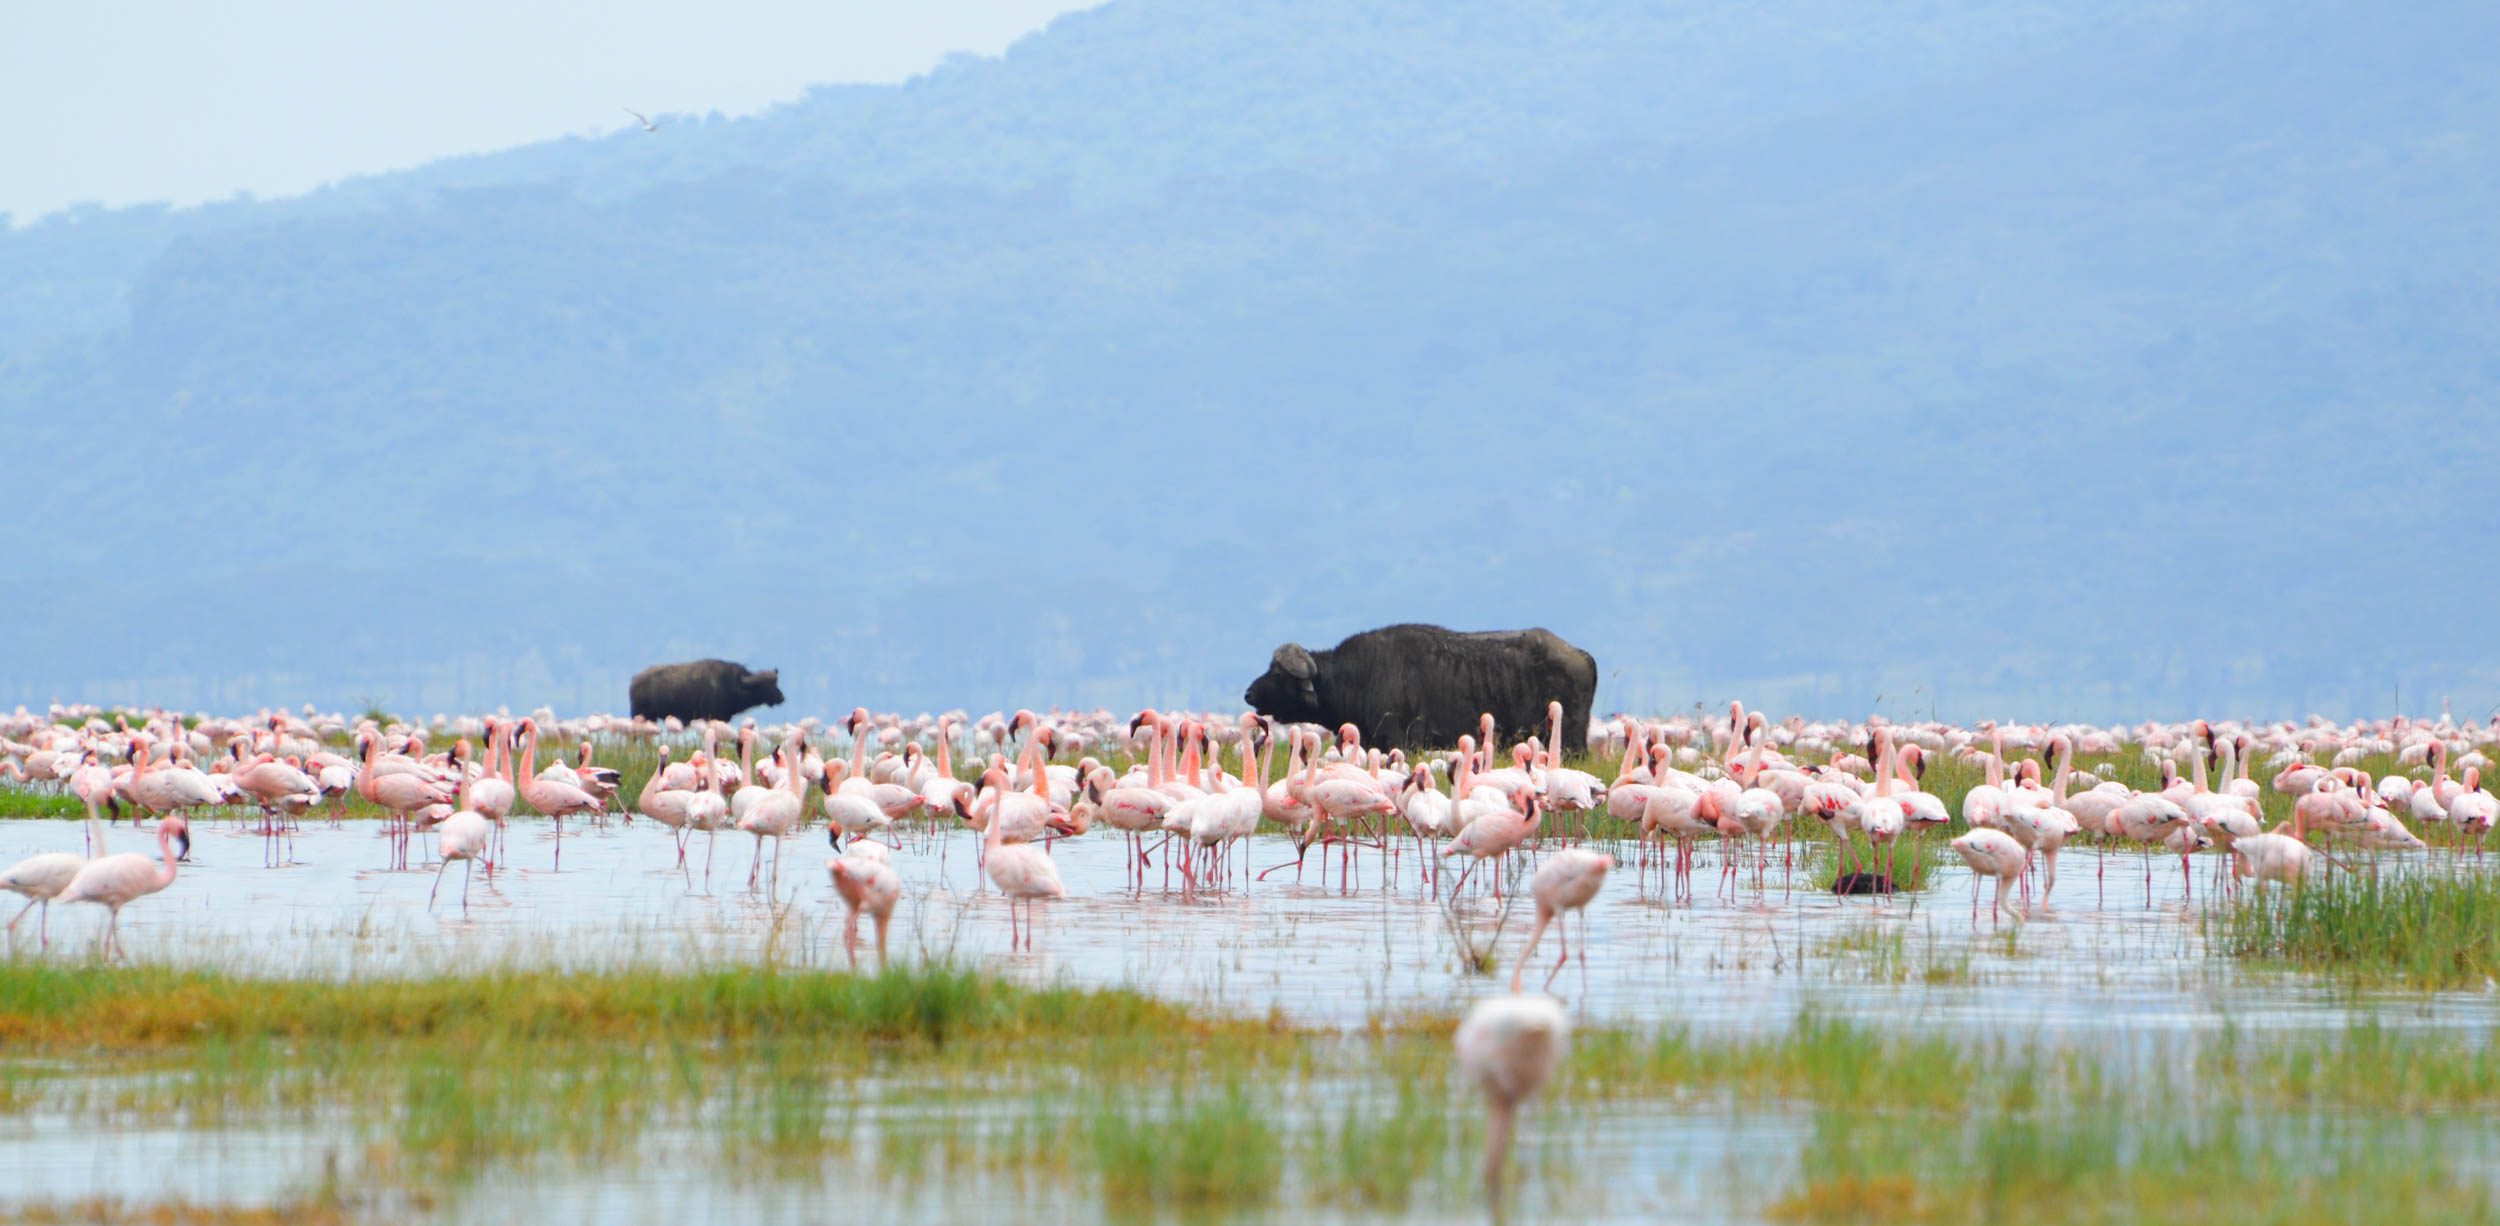 Photo Diary: Nakuru National Park